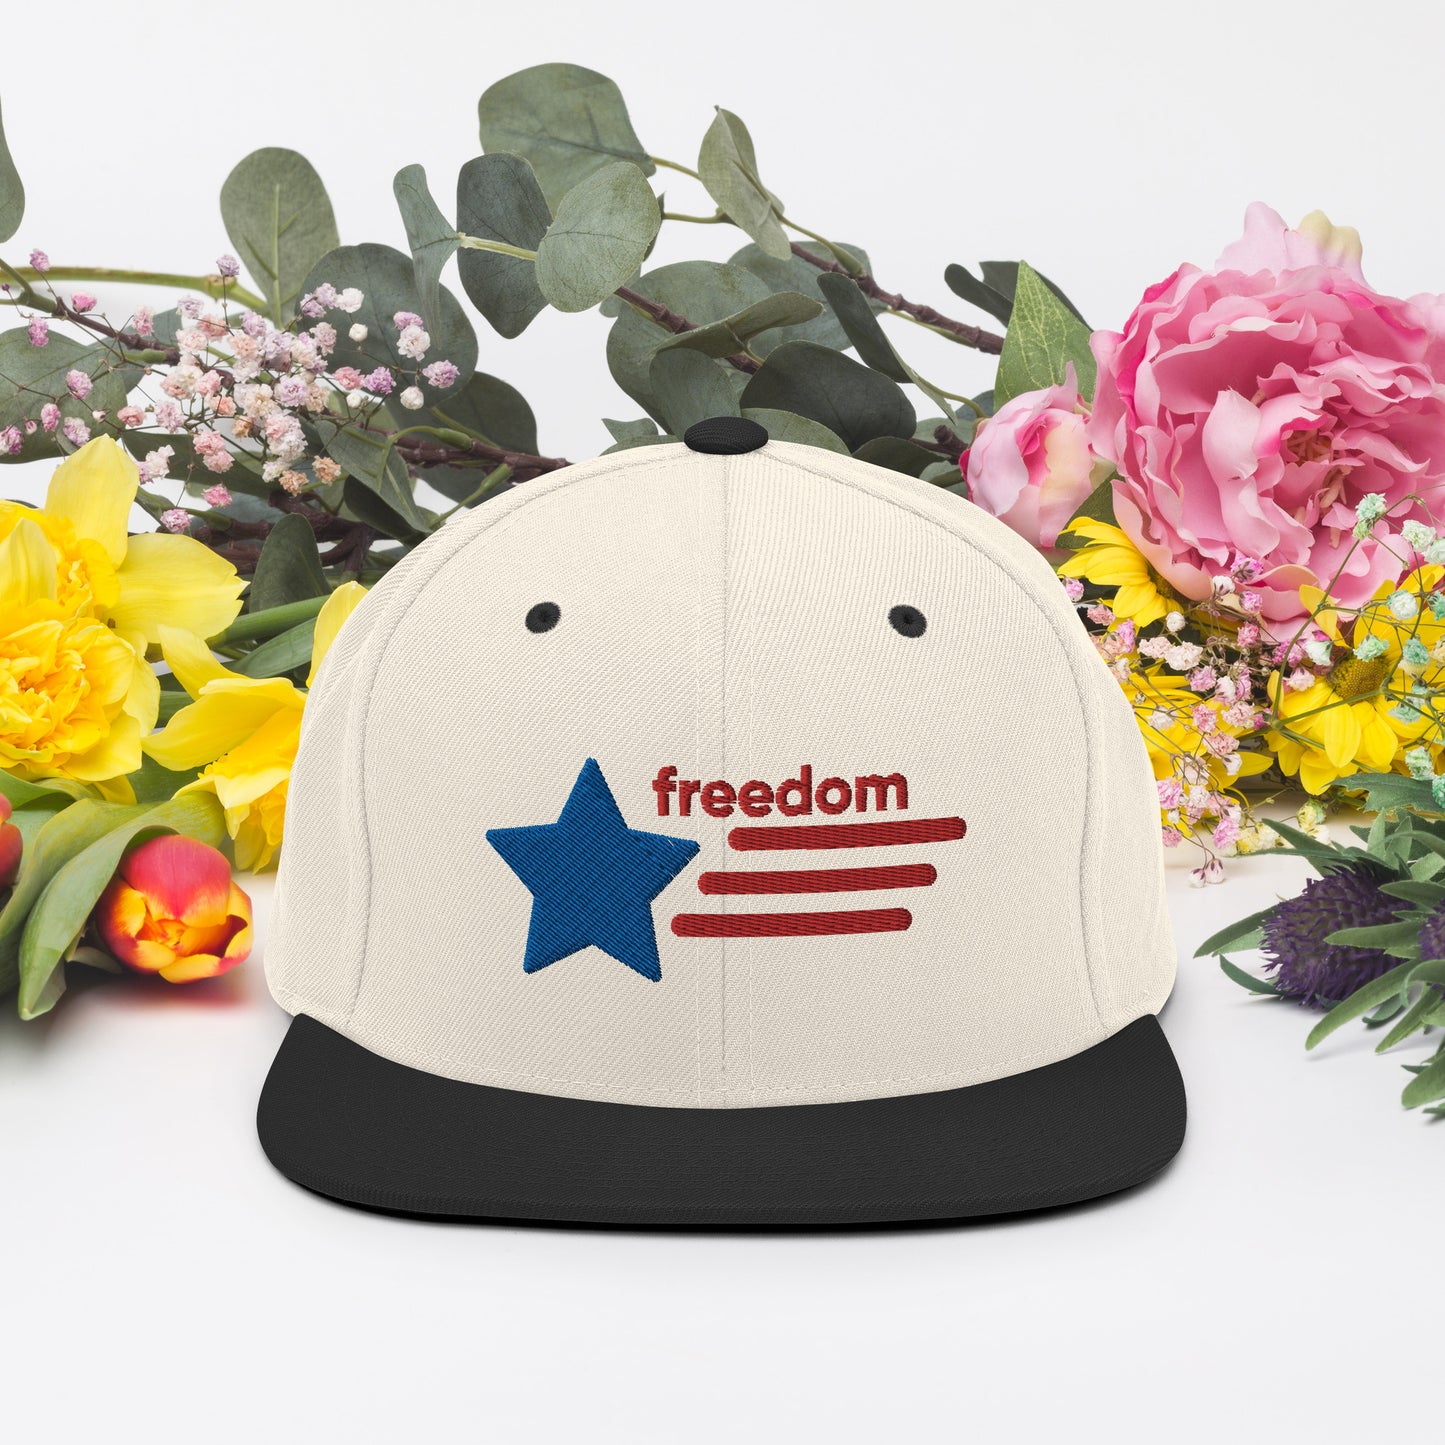 "Freedom" snapback cap